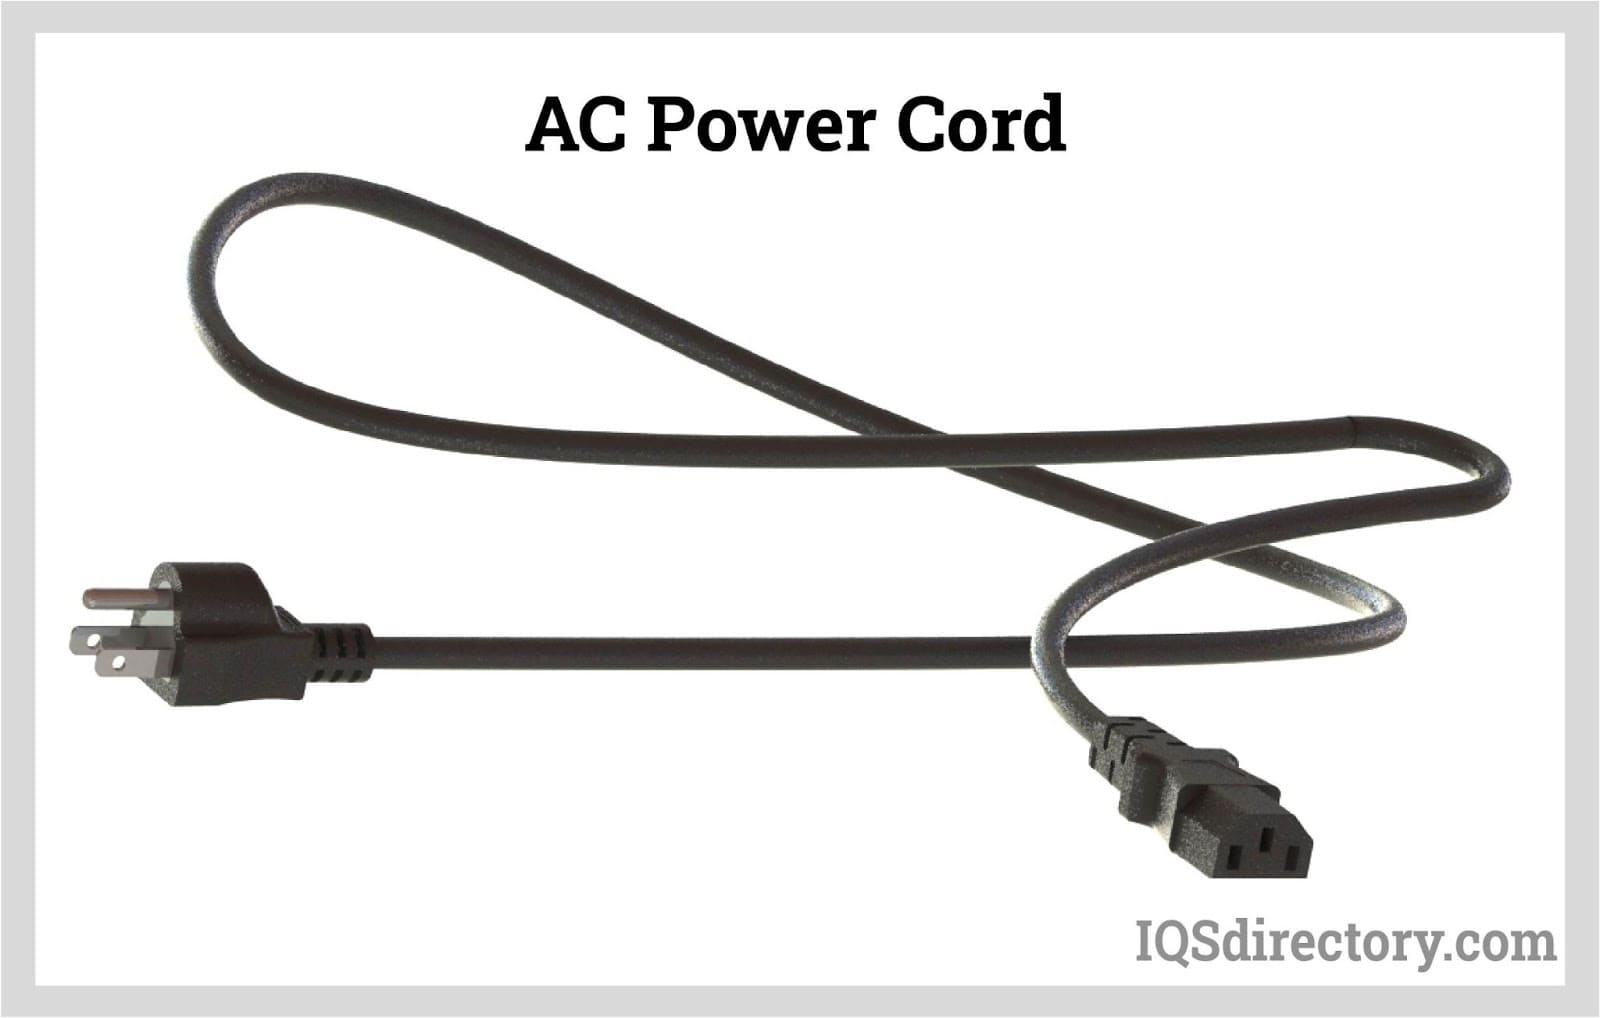 https://www.iqsdirectory.com/articles/power-cord/ac-power-cord.jpg